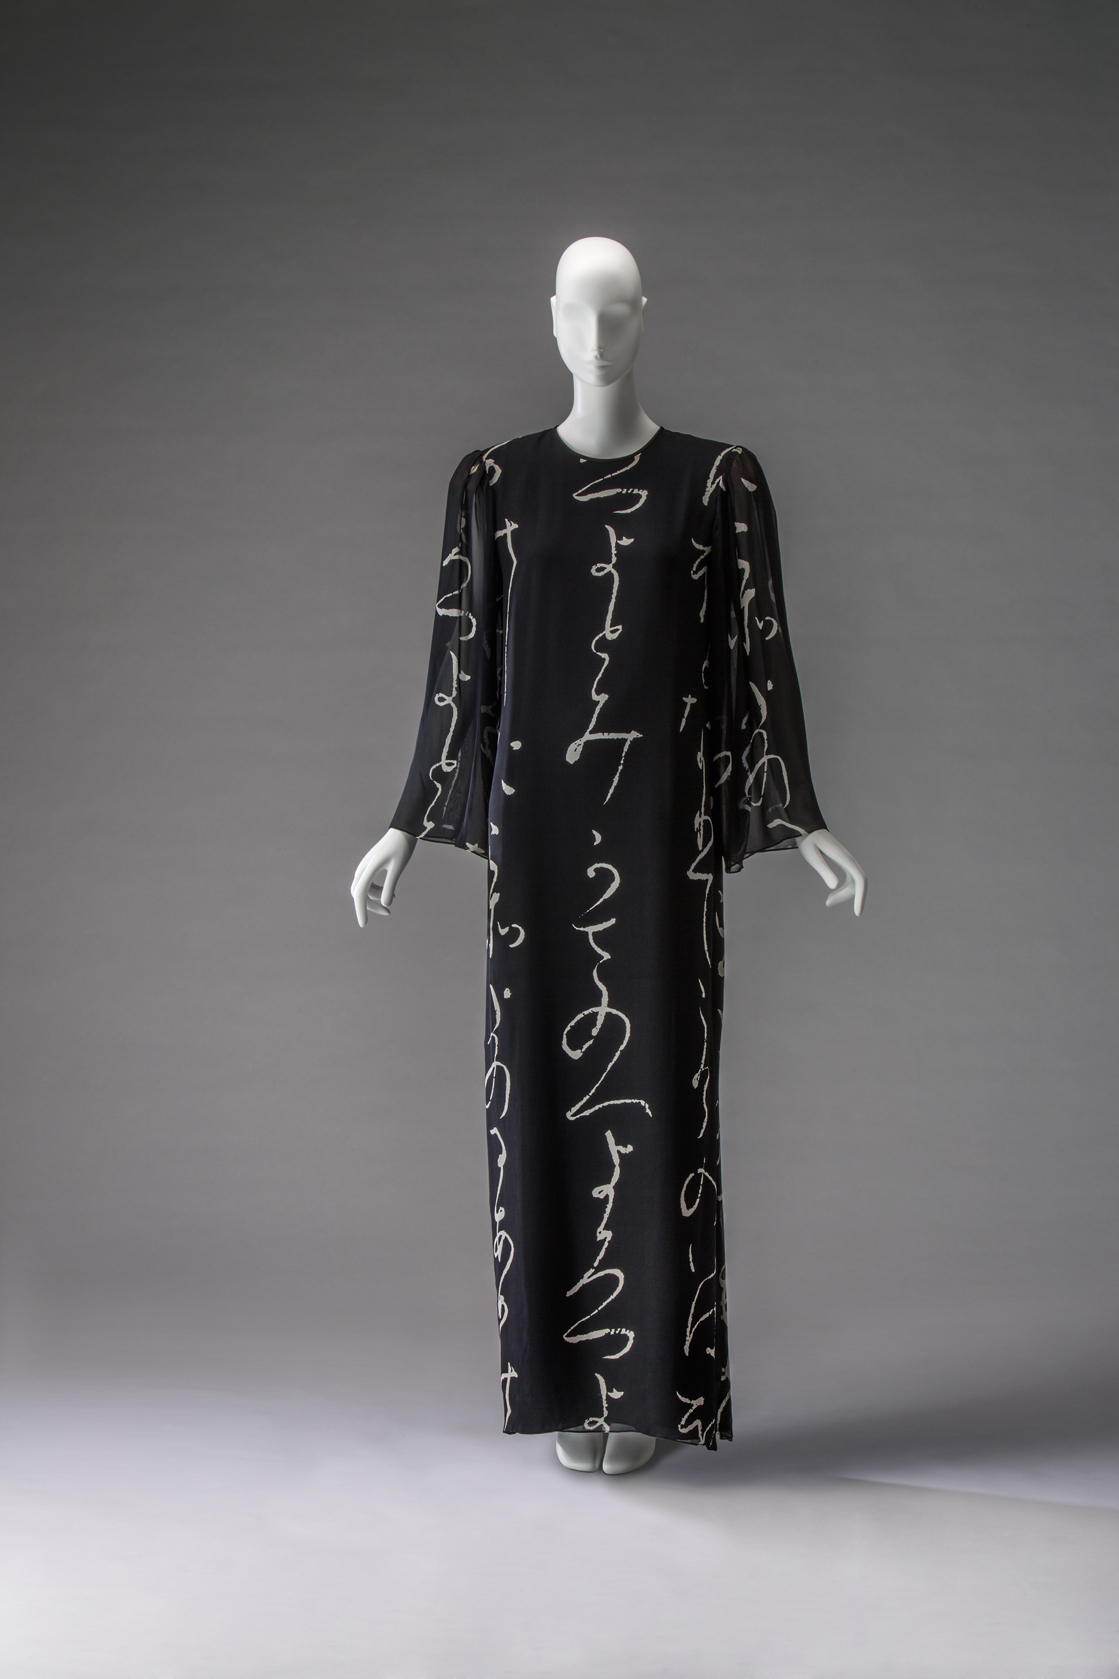 Dress, Autumn/Winter 1989, by Hanae Mori (Japanese, b. 1926). Silk chiffon with printing. Collection of The Kyoto Costume Institute. © The Kyoto Costume Institute, photo by Takashi Hatakeyama.
